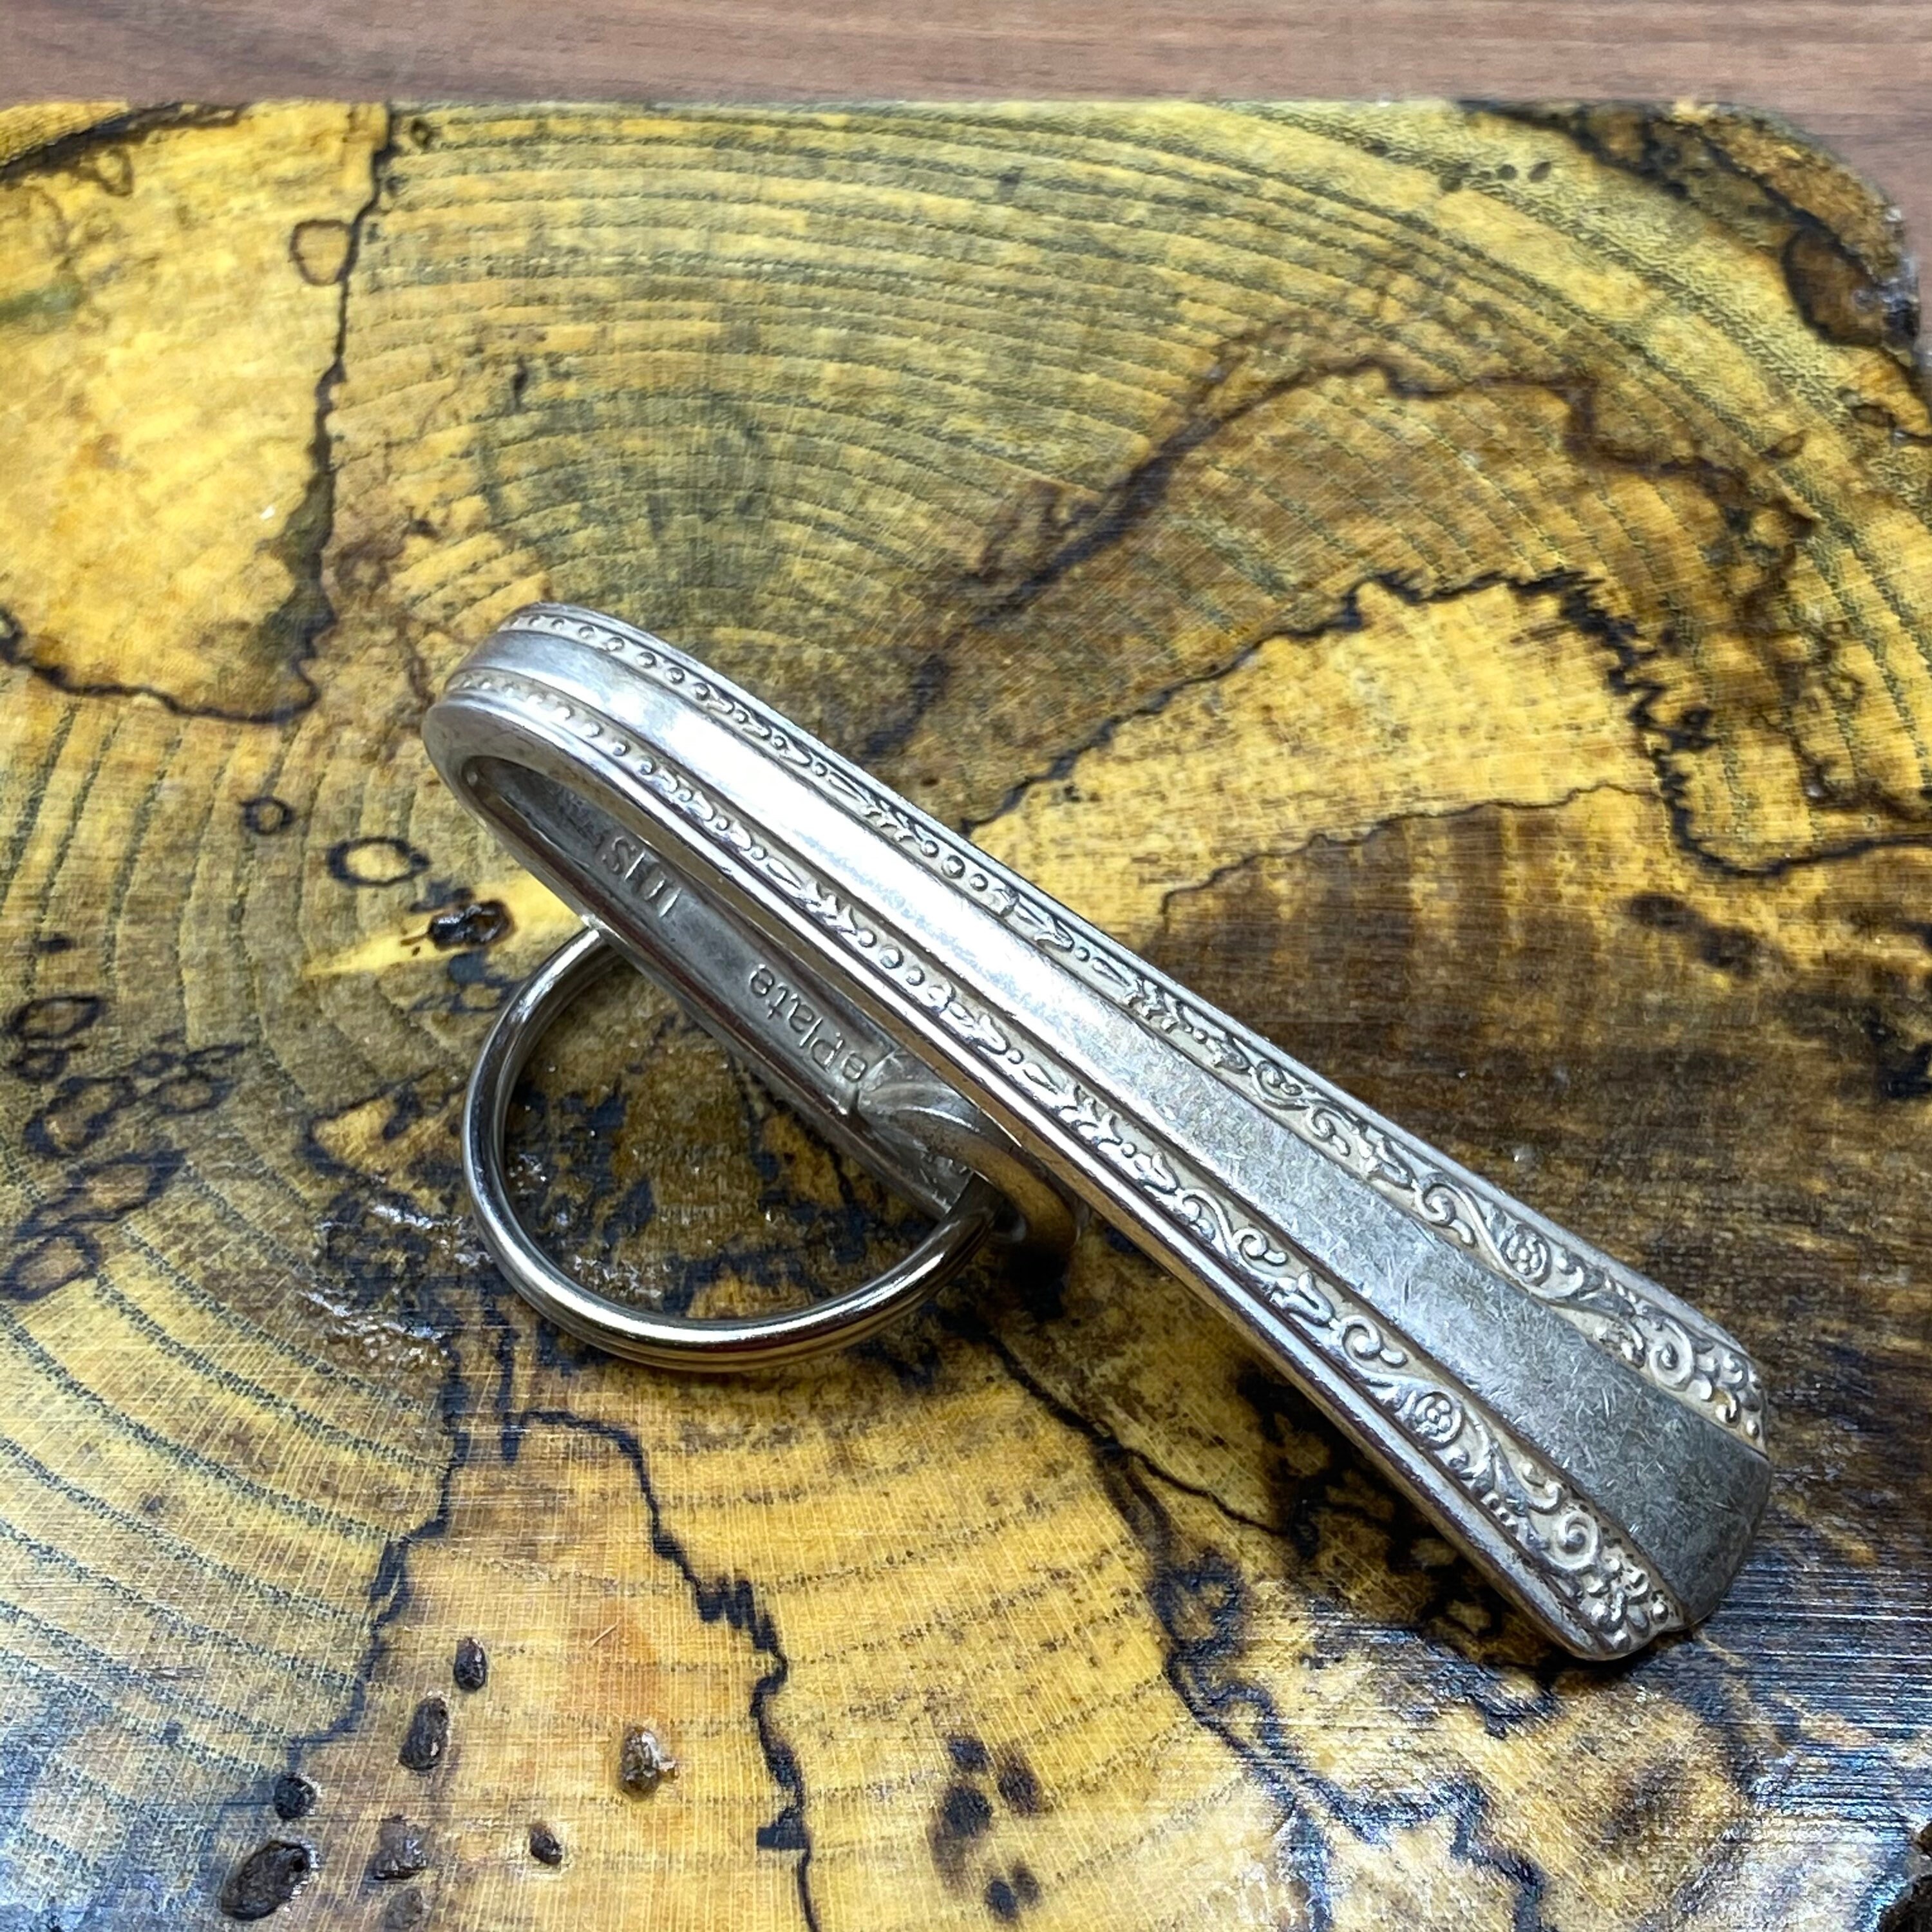 Vintage Silver Purse Hook Key Finder Key Holder Ring Upcycle Pocket  Keychain Silverplate Silverware Friendship